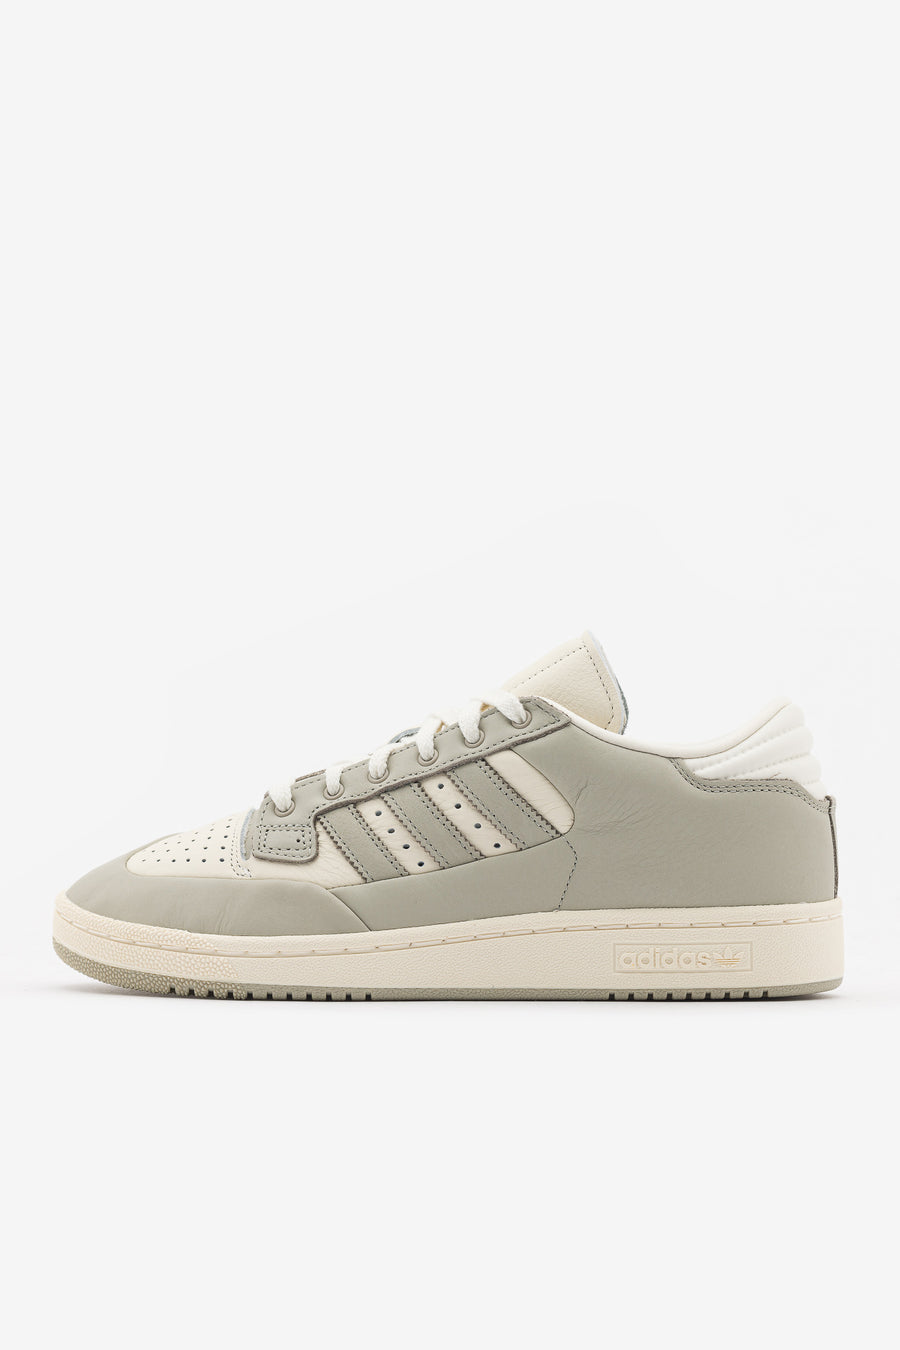 adidas - Men's Cetennial 85 Lo 001 Sneaker in Sesame/Cream White/Cloud White